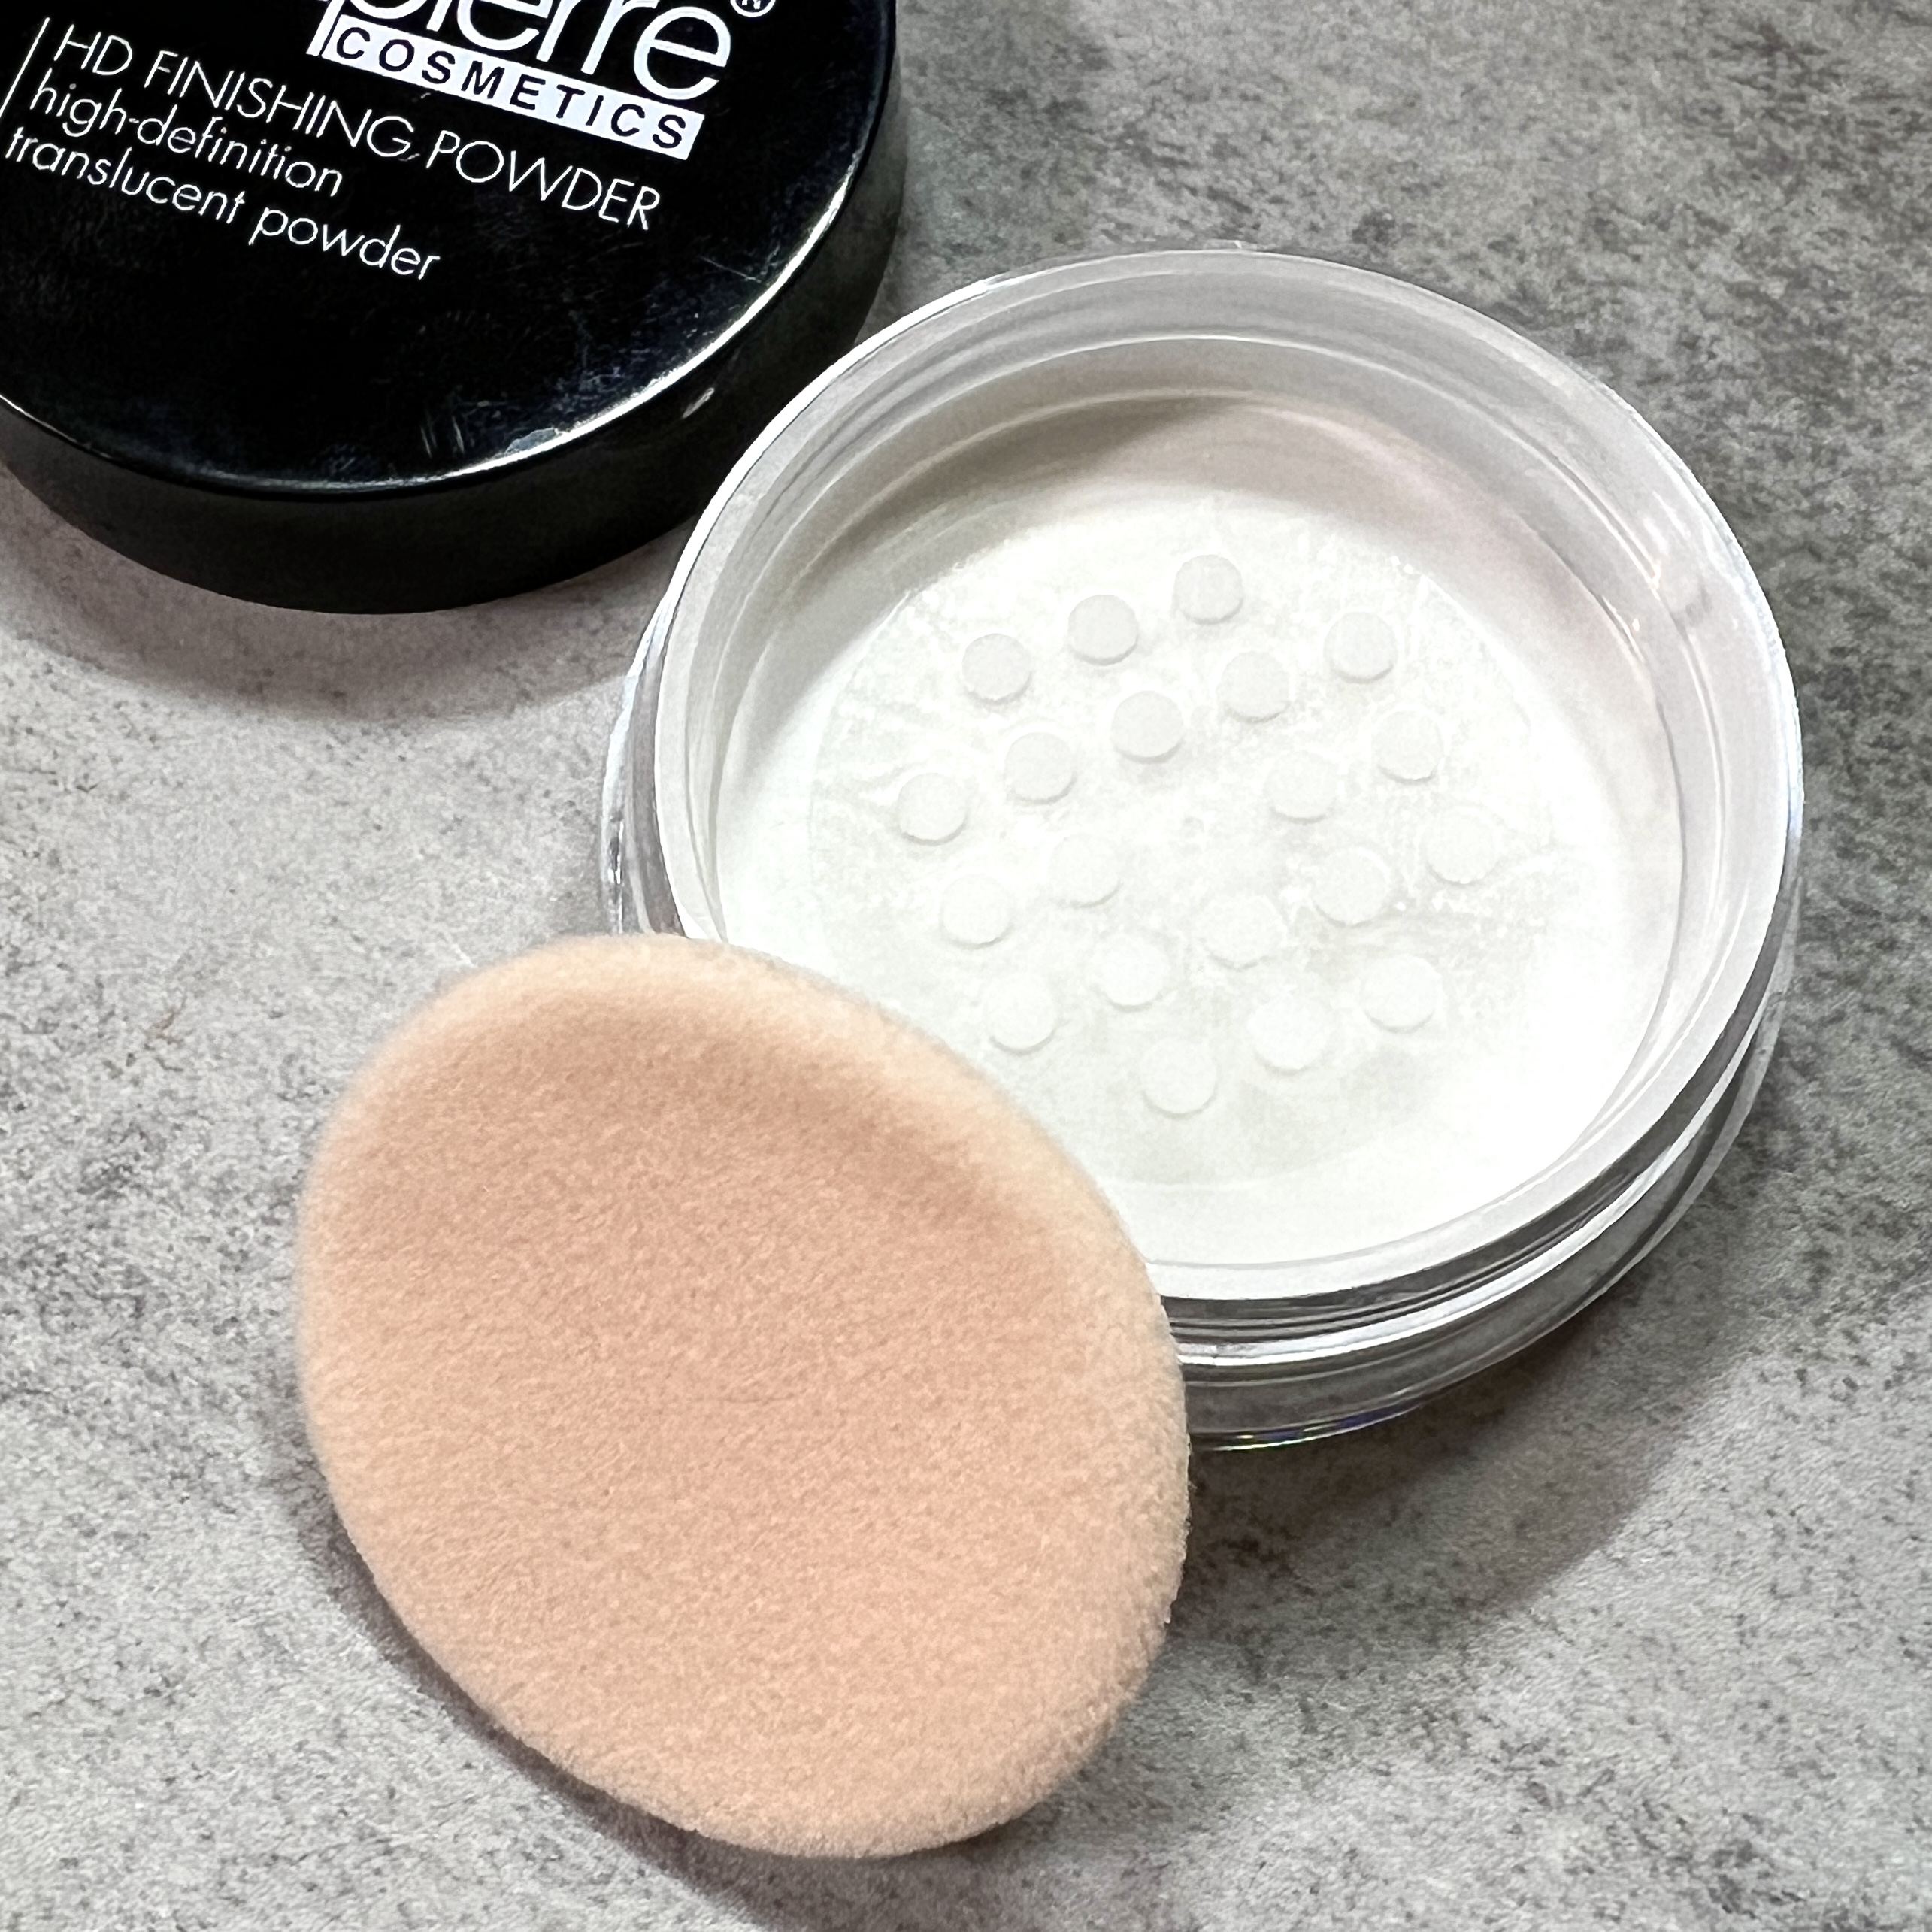 Closeup of Bellapierre Cosmetics Finishing Powder for Nourish Beauty Box